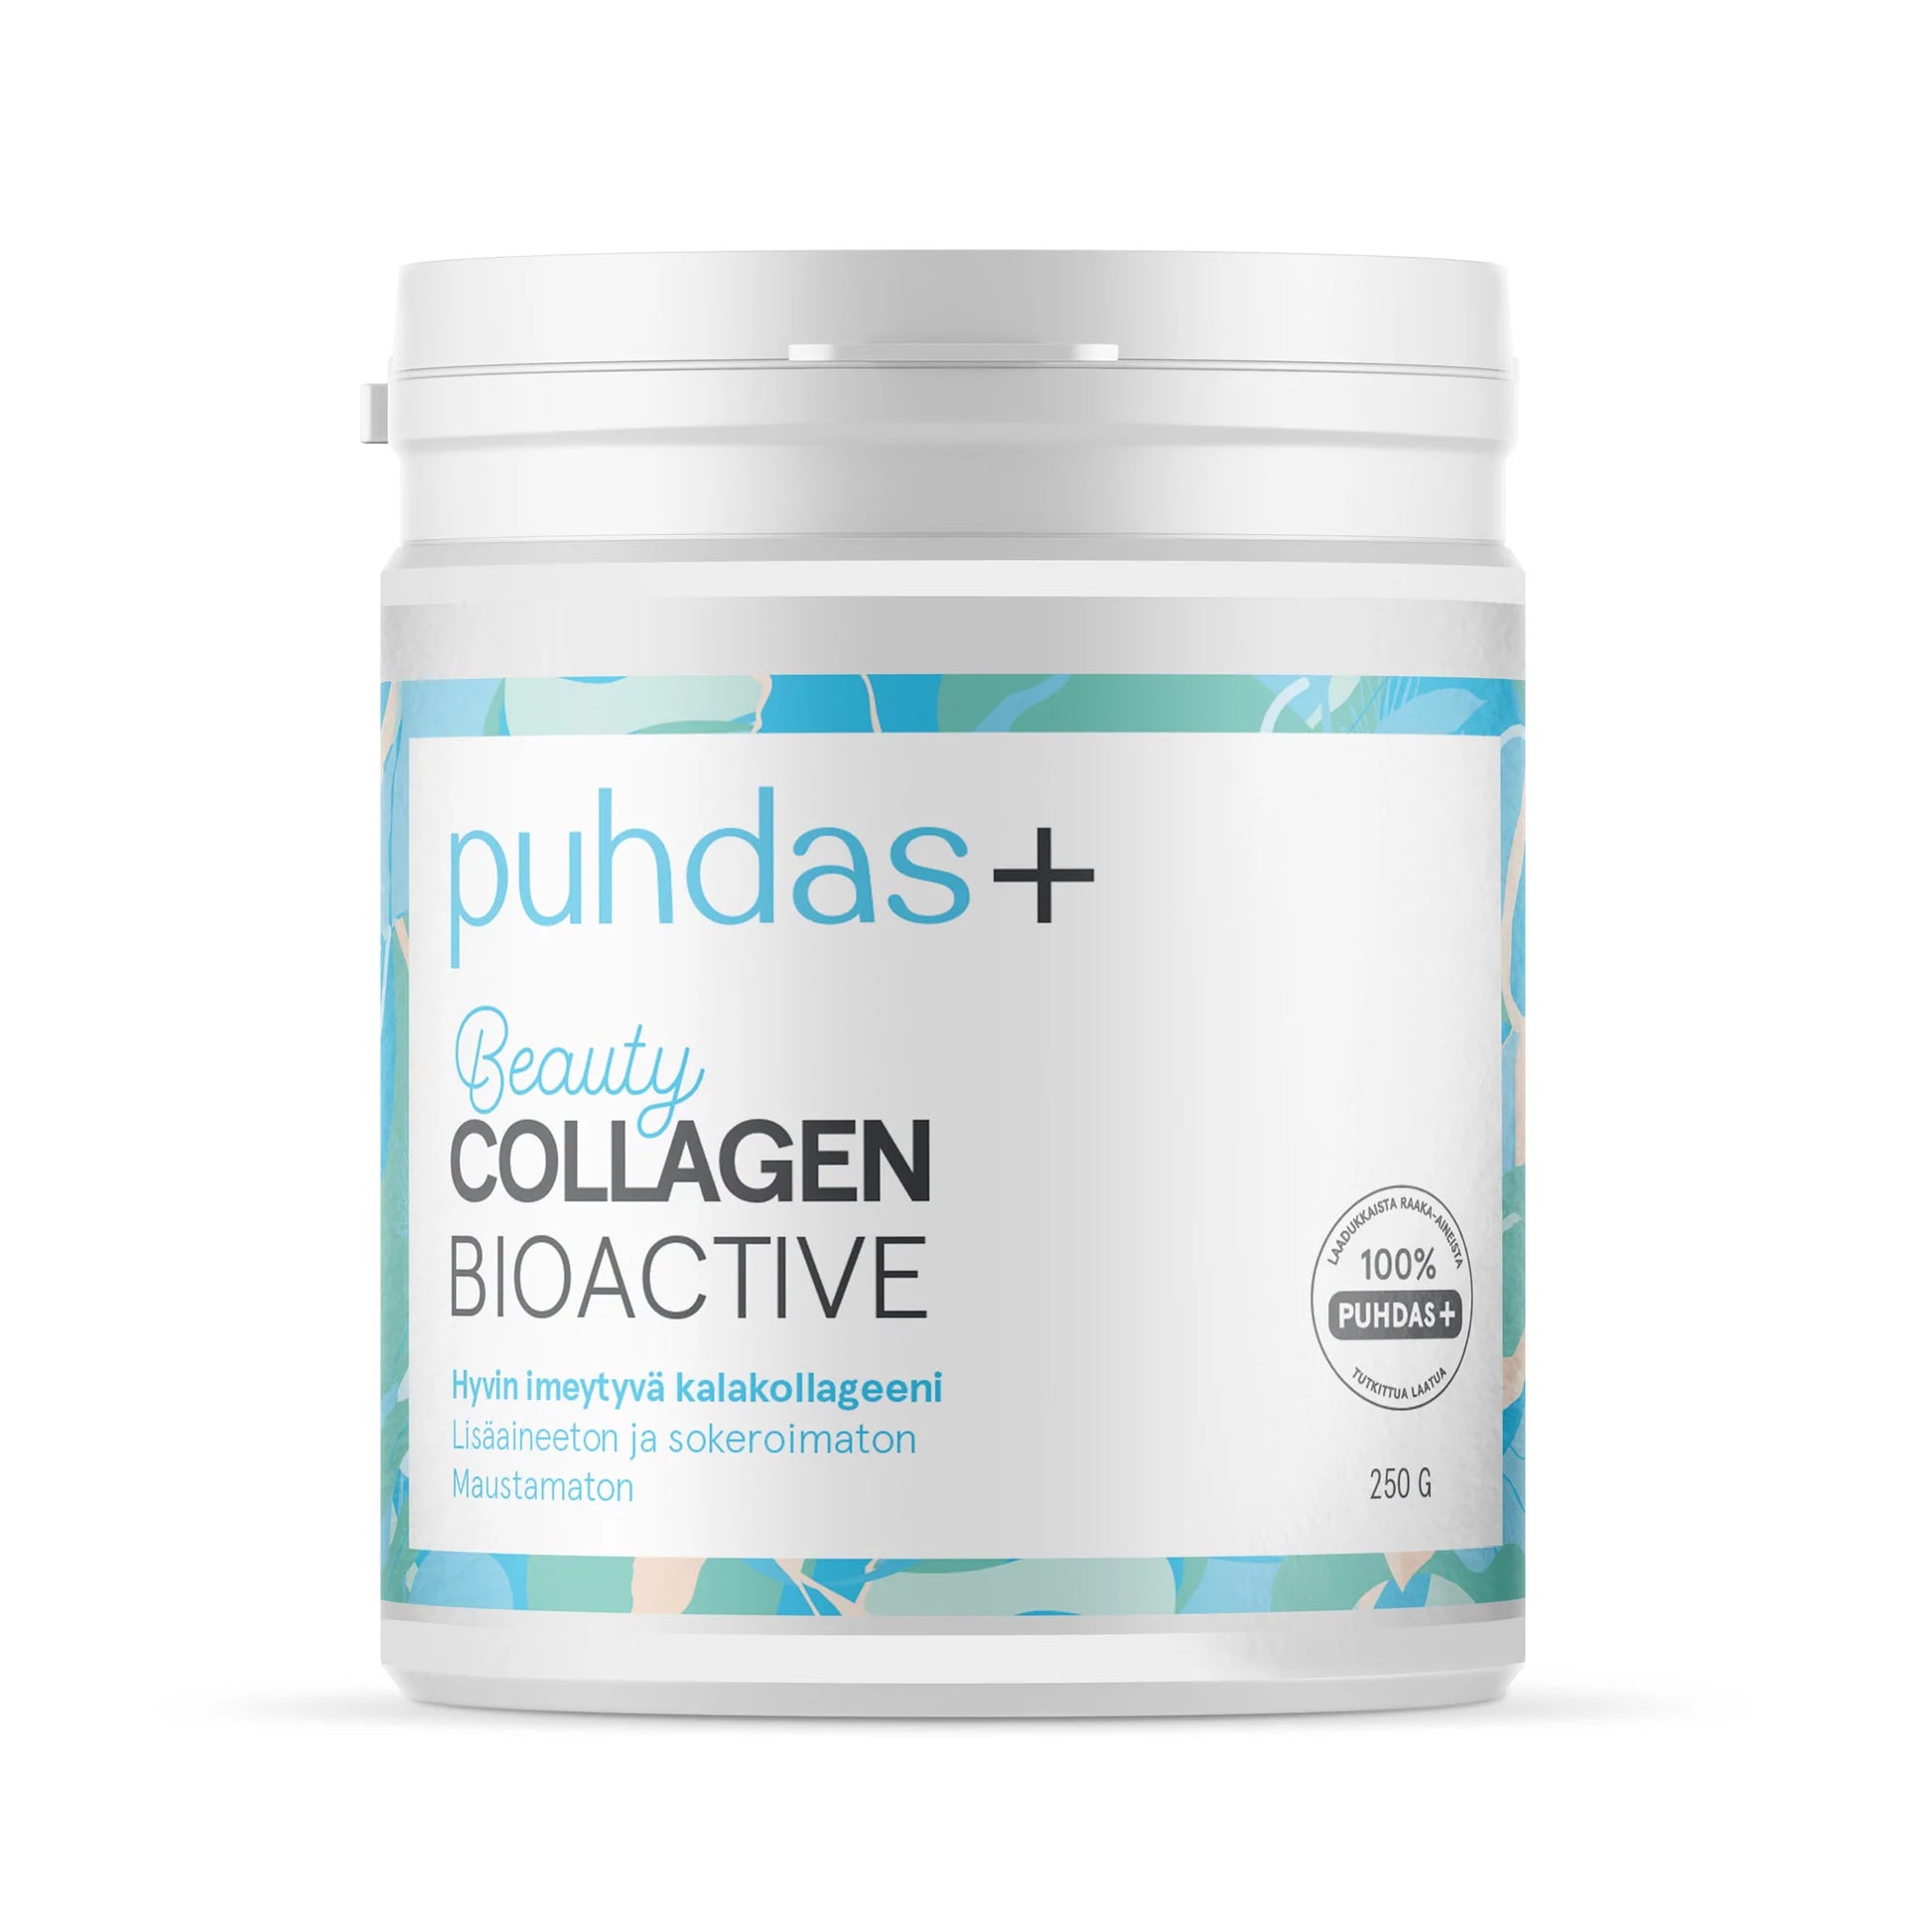 PUHDAS+ Beauty collagen bioactive natural 250 g